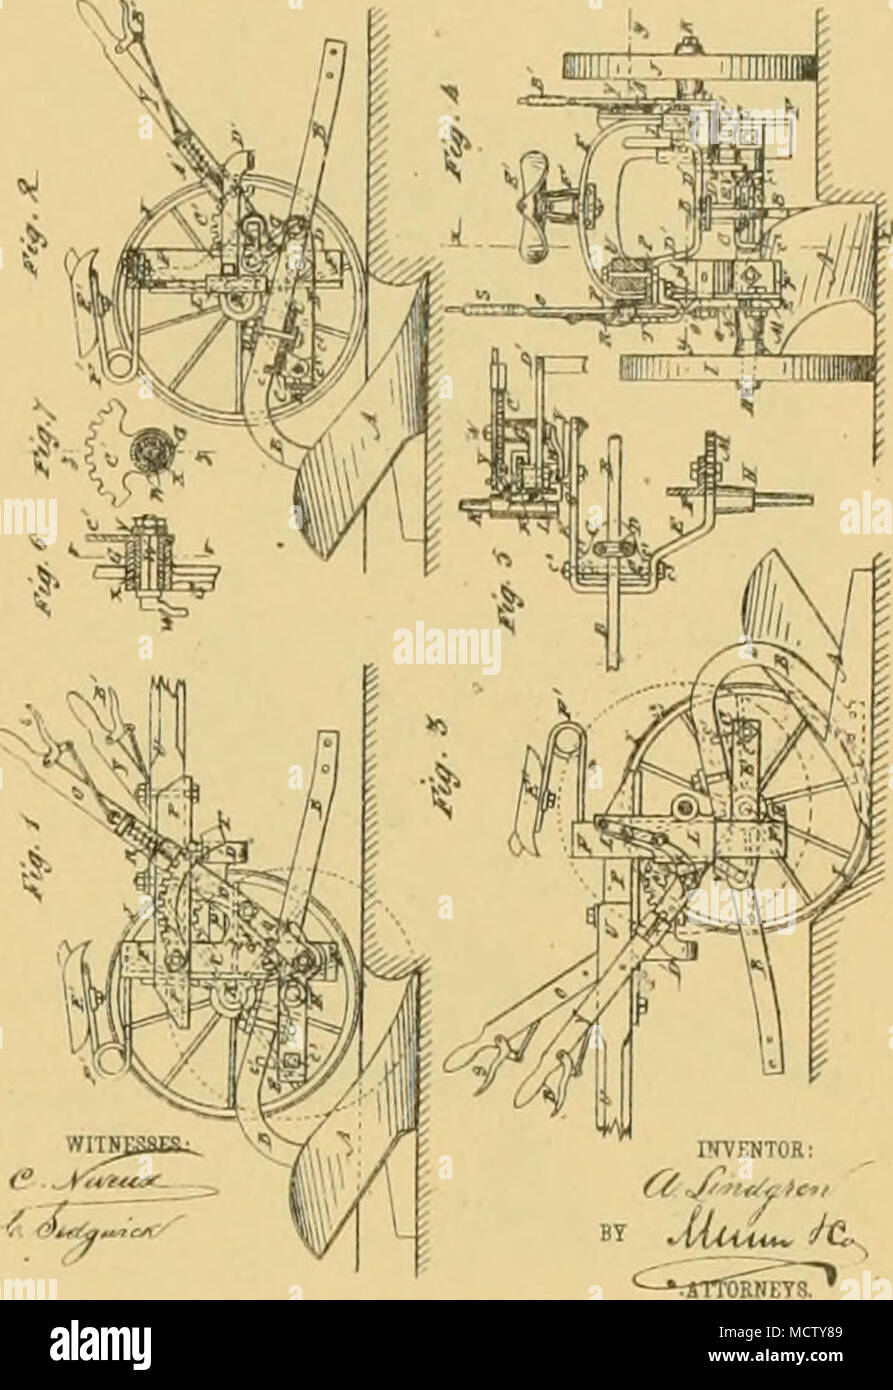 . E G MATTHEWS, Plt&gt;w No. 224,455 Palenled Fob. 10. 1830, J 1. MCNZ. Sulky-Plow No. 224.713 Patented'Feb. 17, 1880, Stock Photo